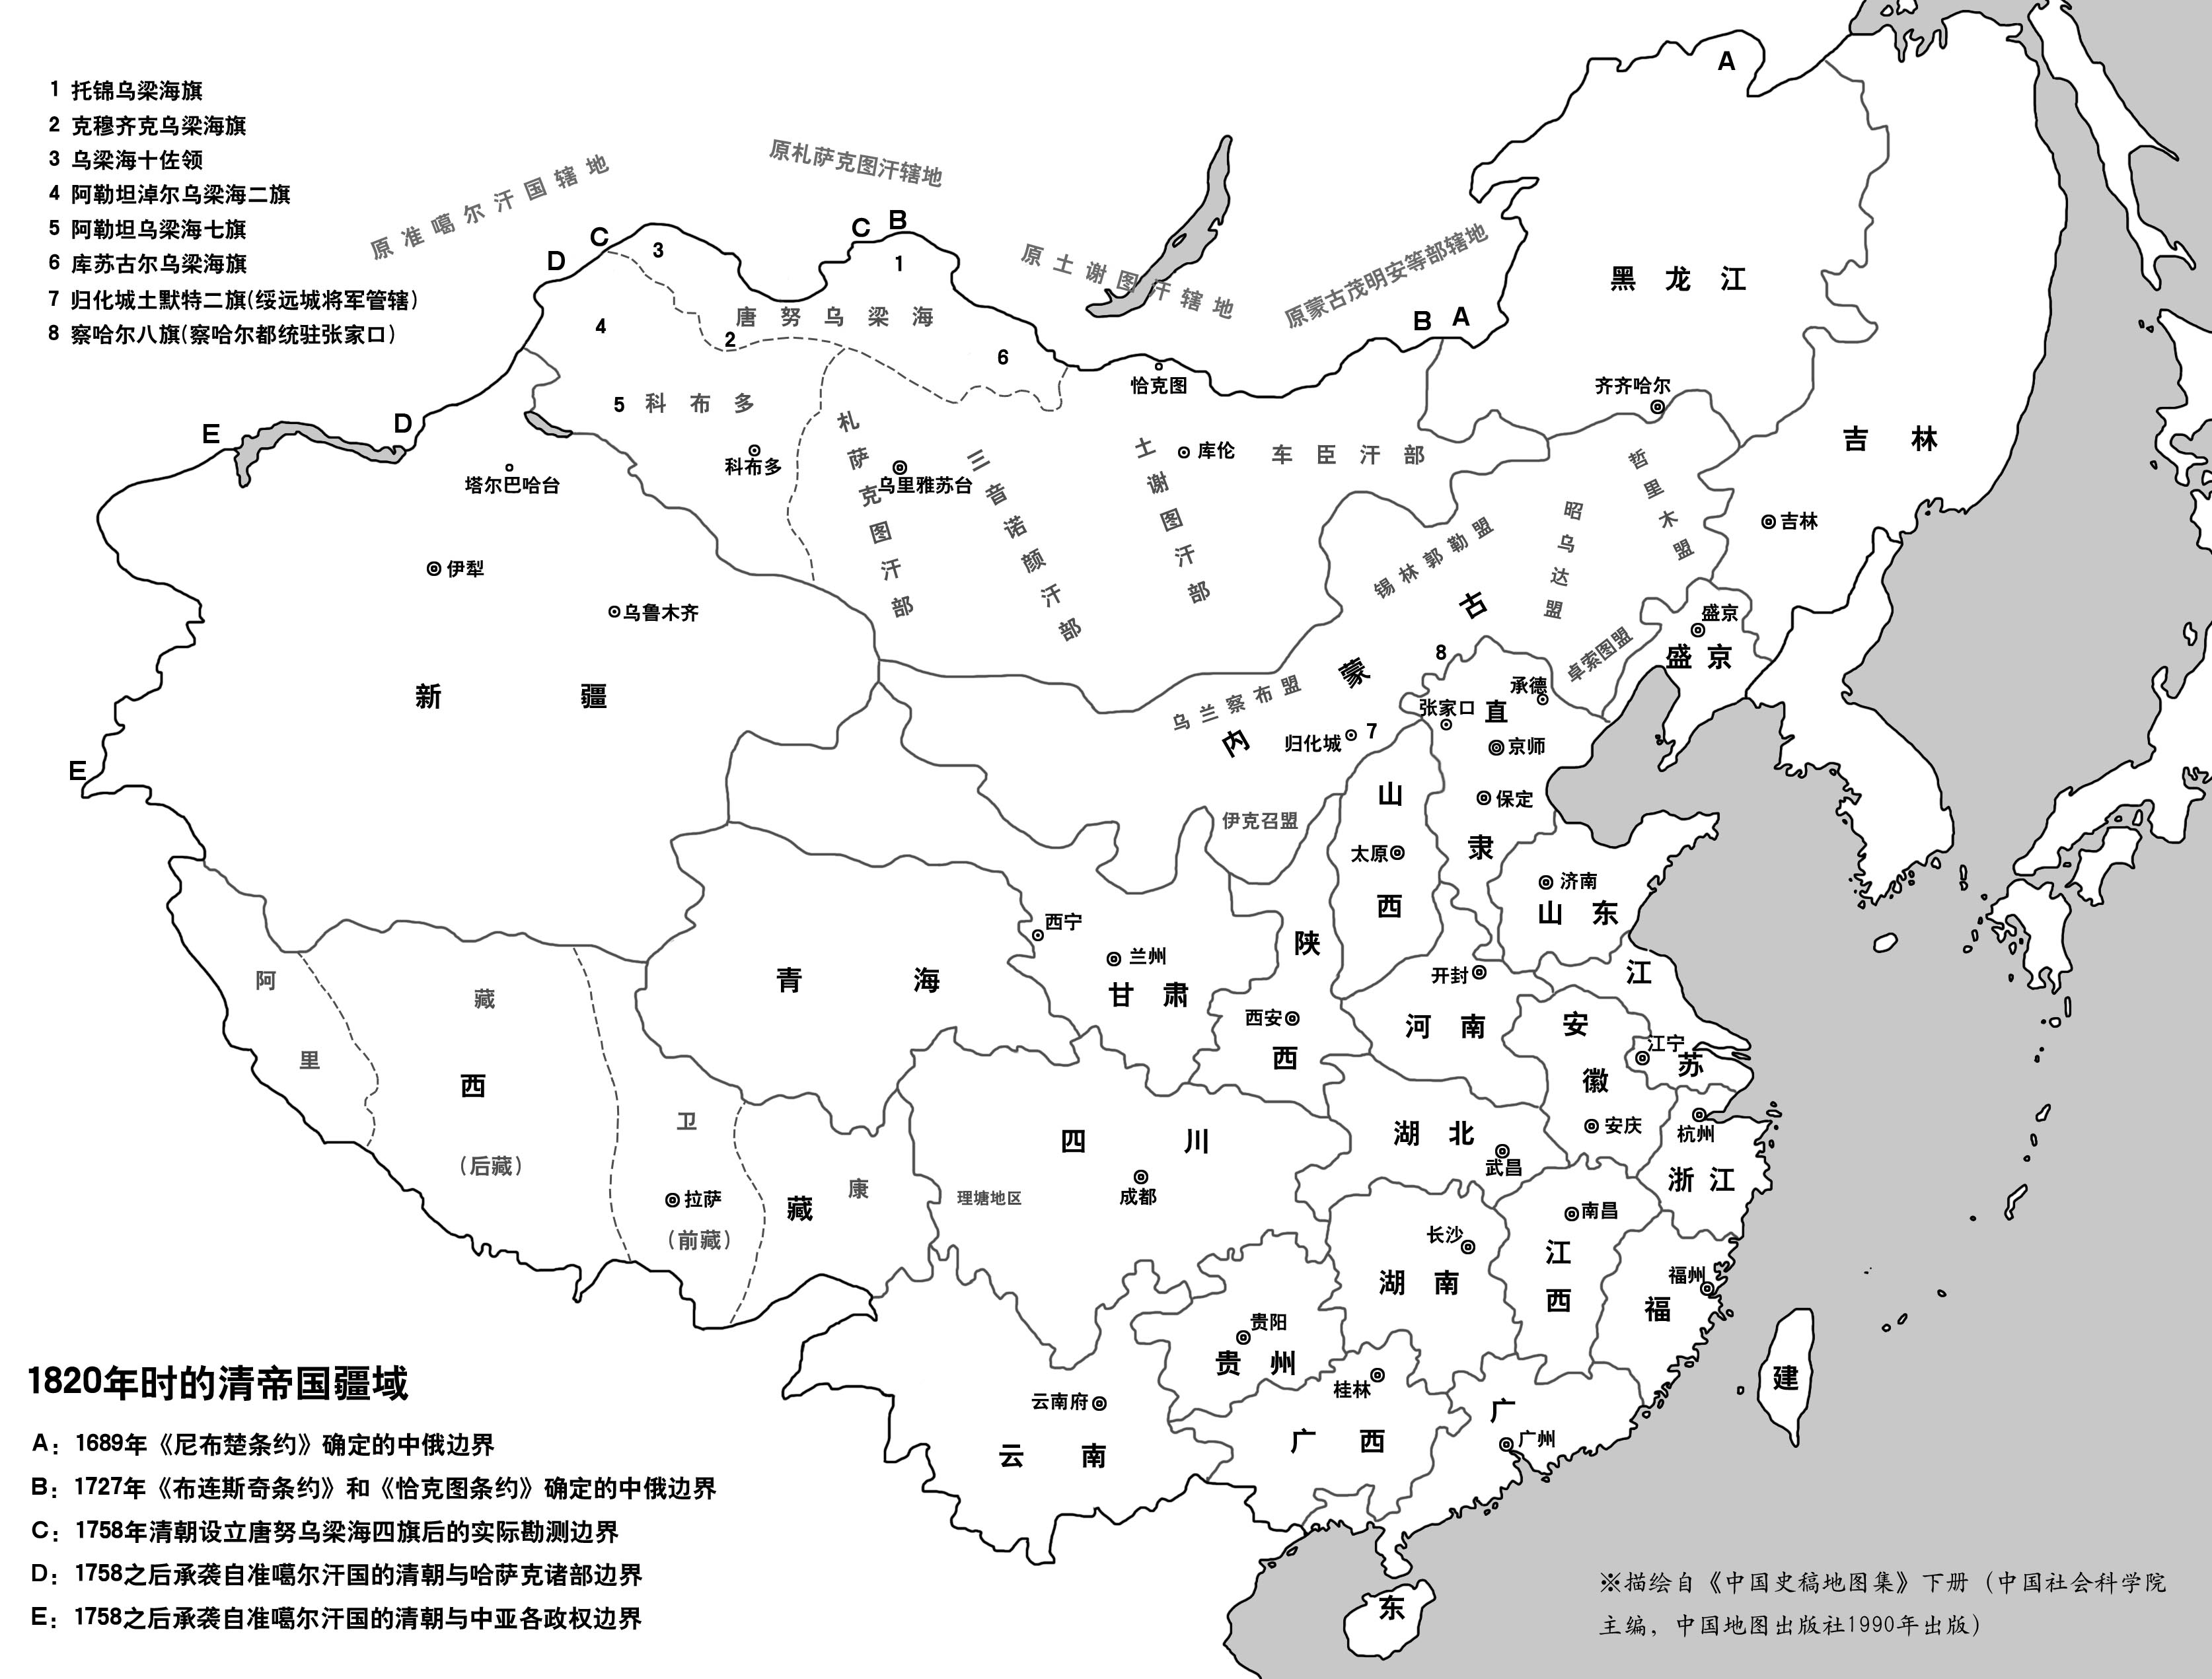 Divisiones-administrativas-del-Imperio-Qing-en-1820.jpg